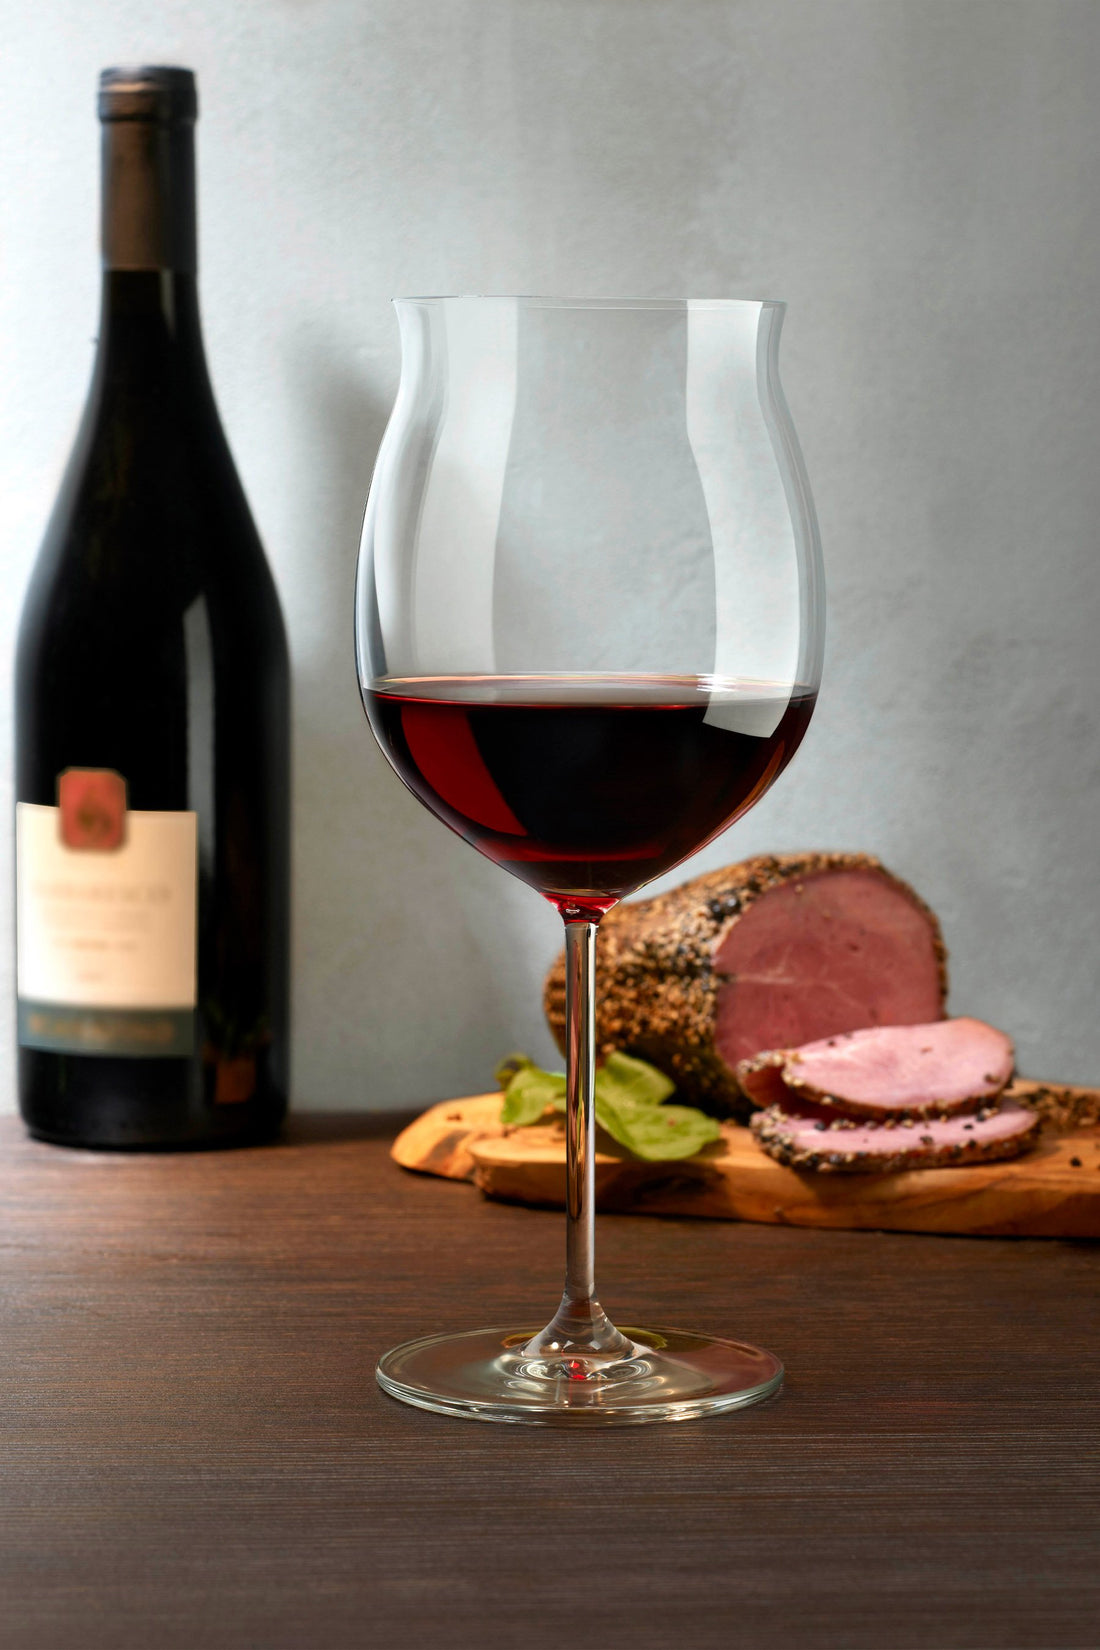 Vintage İkili Burgonya Kırmızı Şarap Kadehi Seti 725 cc